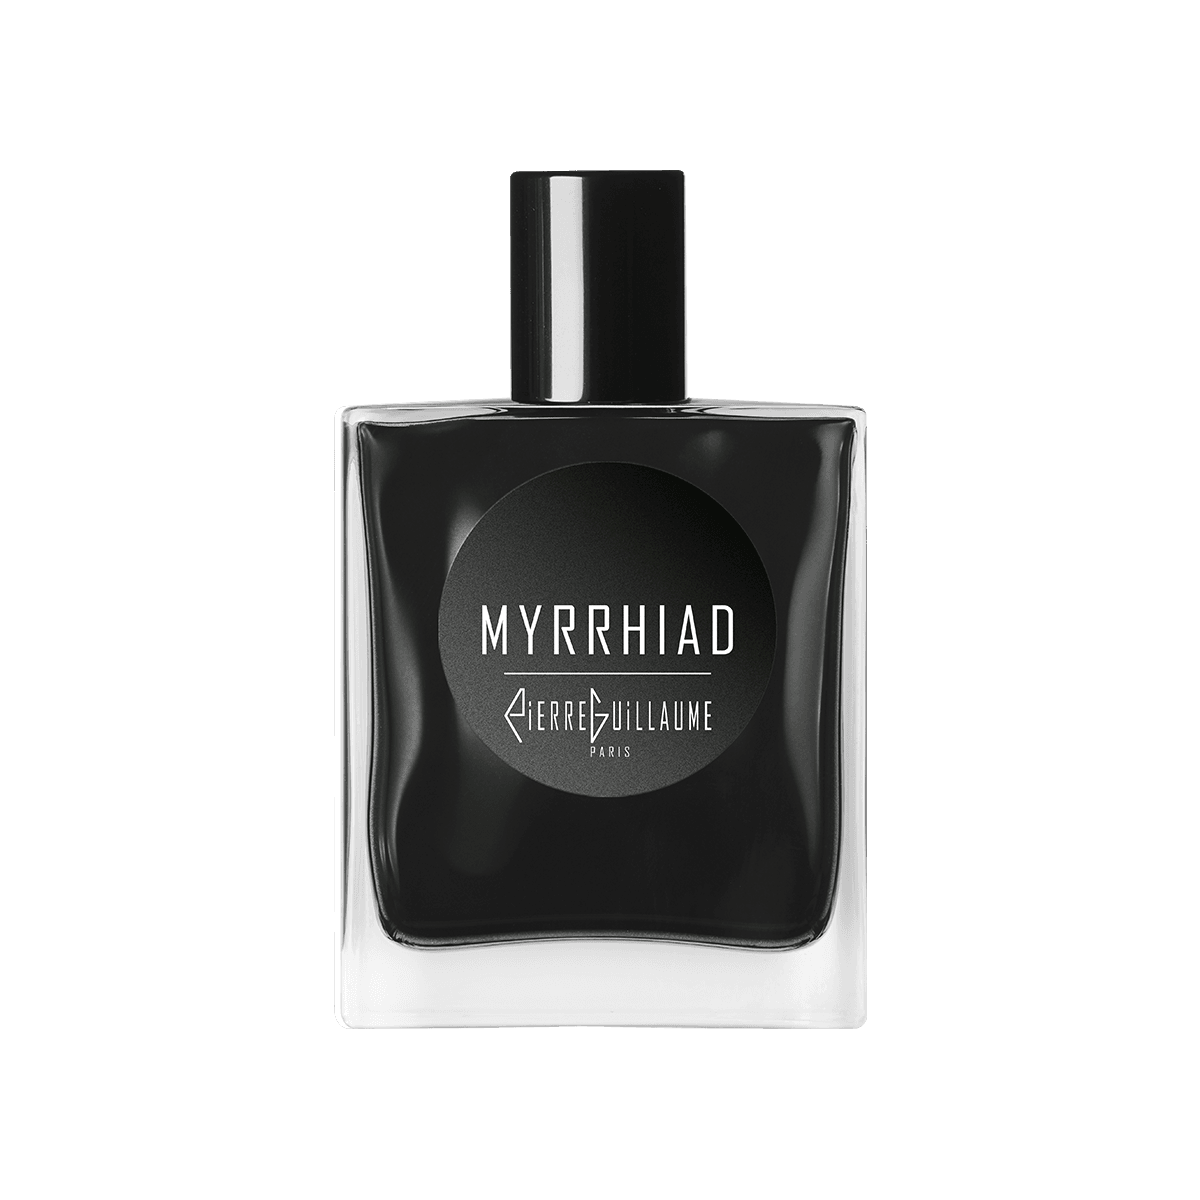 Pierre Guillaume Noire - Myrrhiad 50 ml | Perfume Lounge